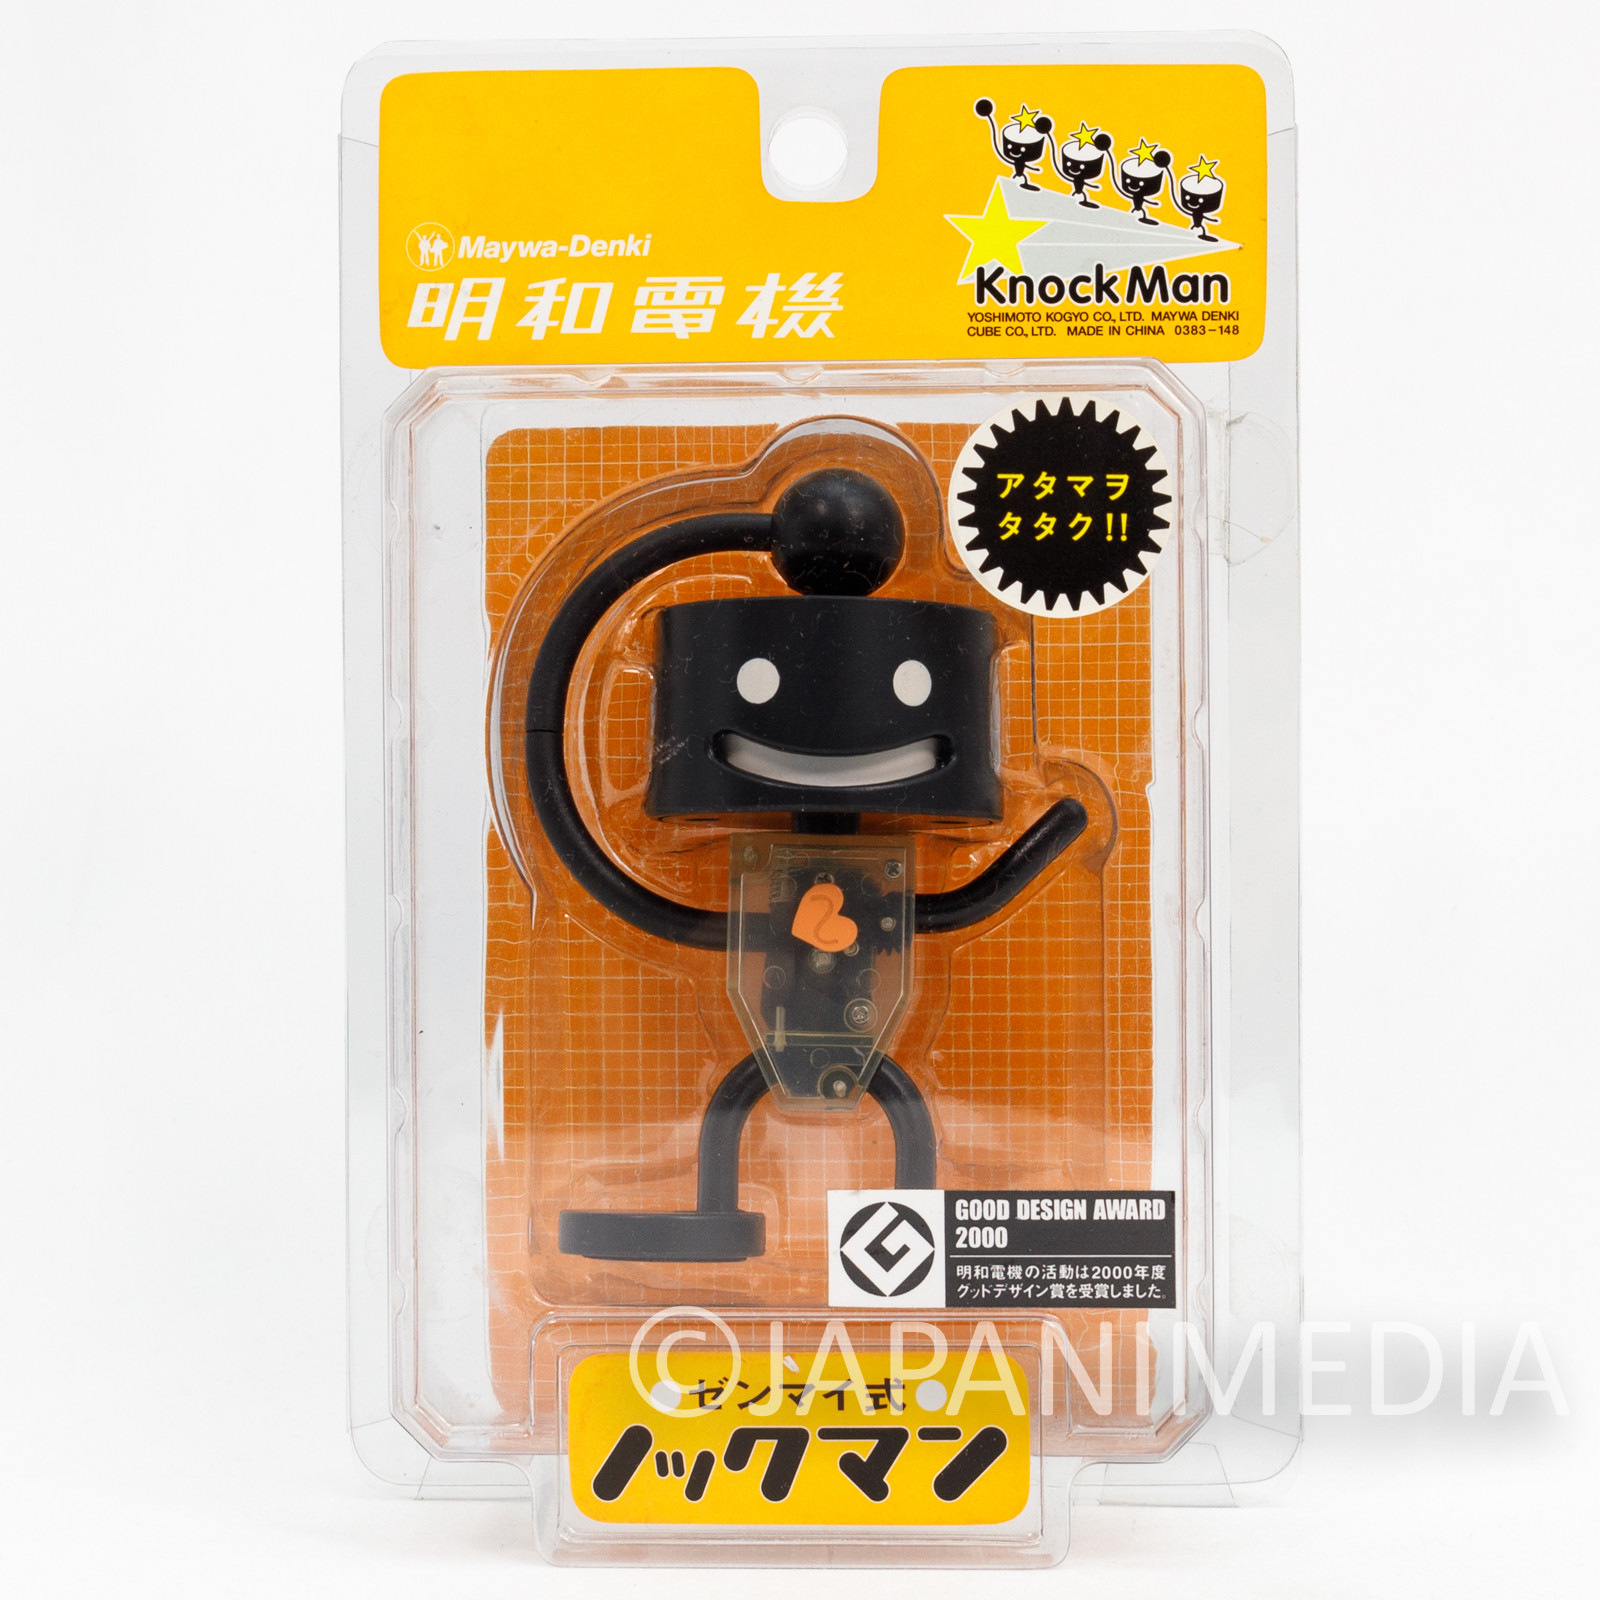 Meiwa Denki Knock Man Family KNOCKMAN Black Wind-up Sound Figure Toy JAPAN